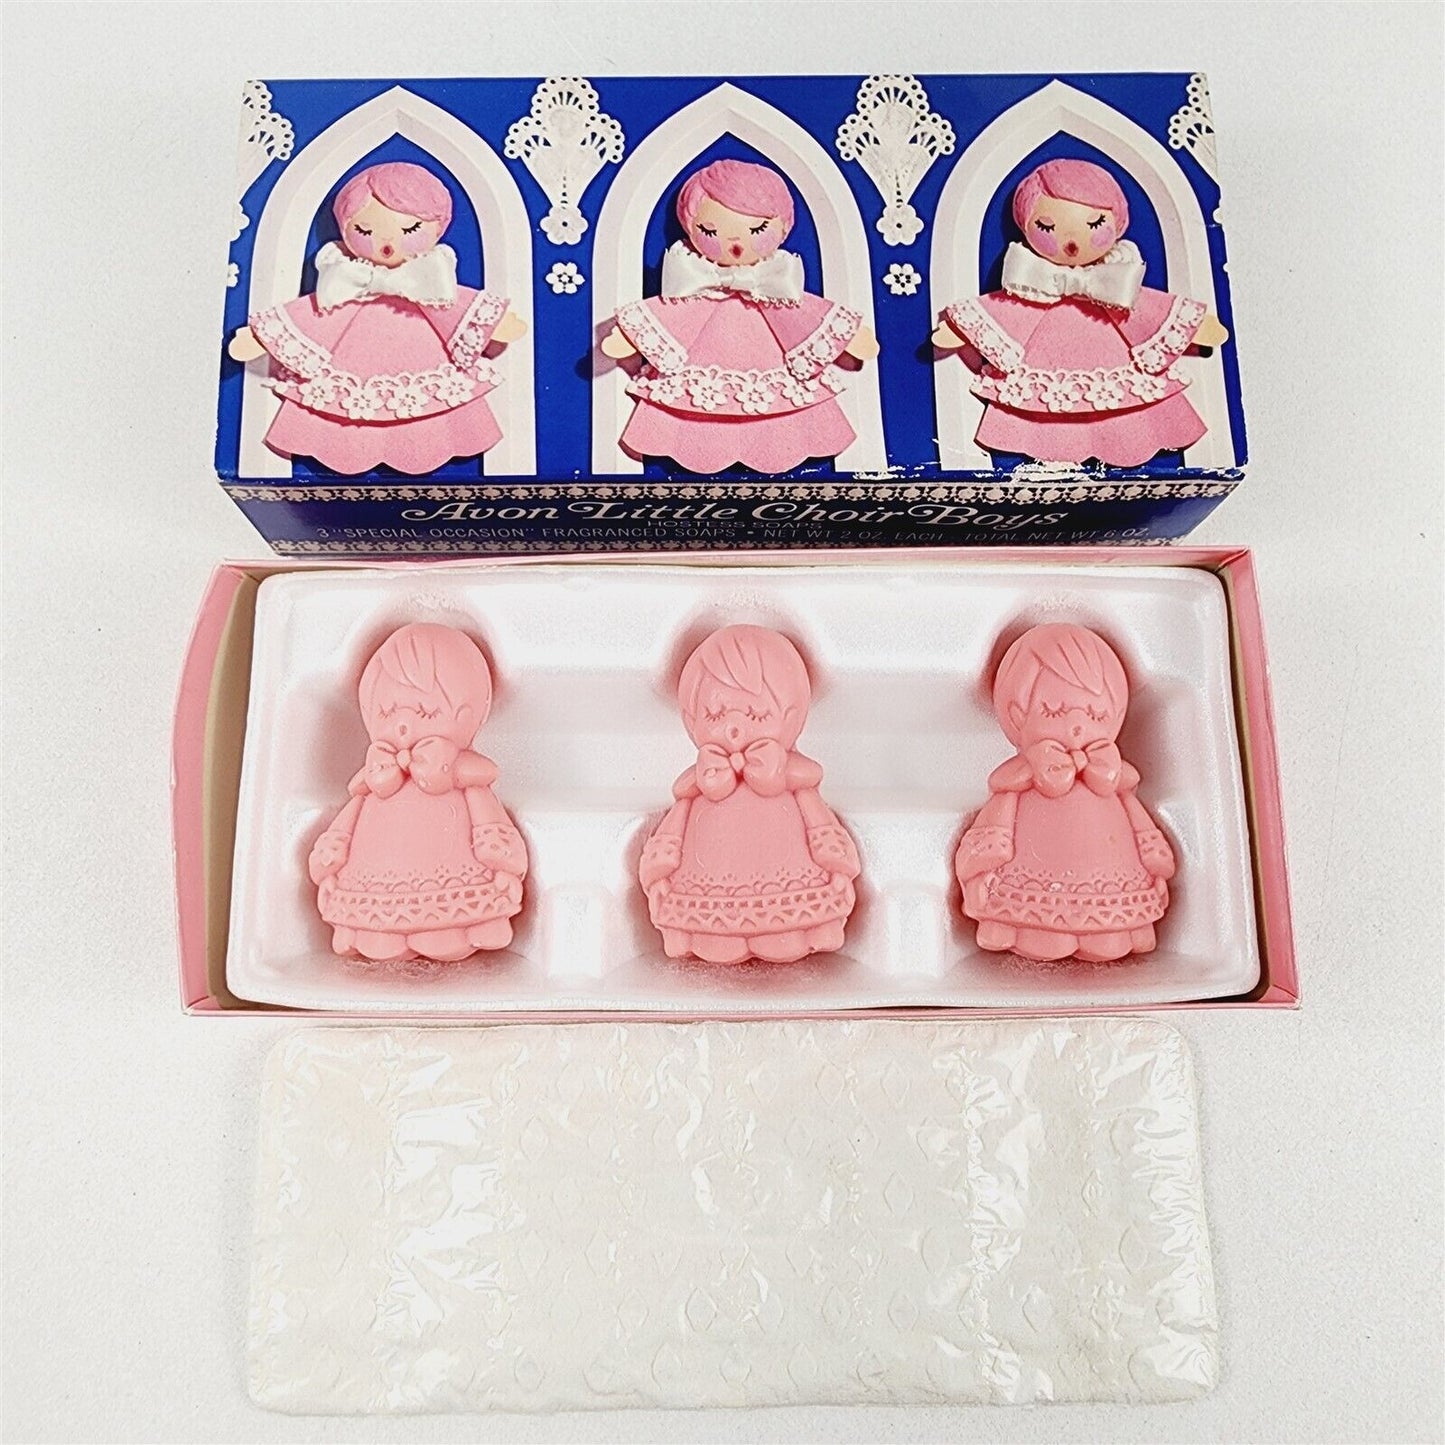 Vintage Avon Little Choir Boys Hostess Fragranced Soaps in Original Packaging